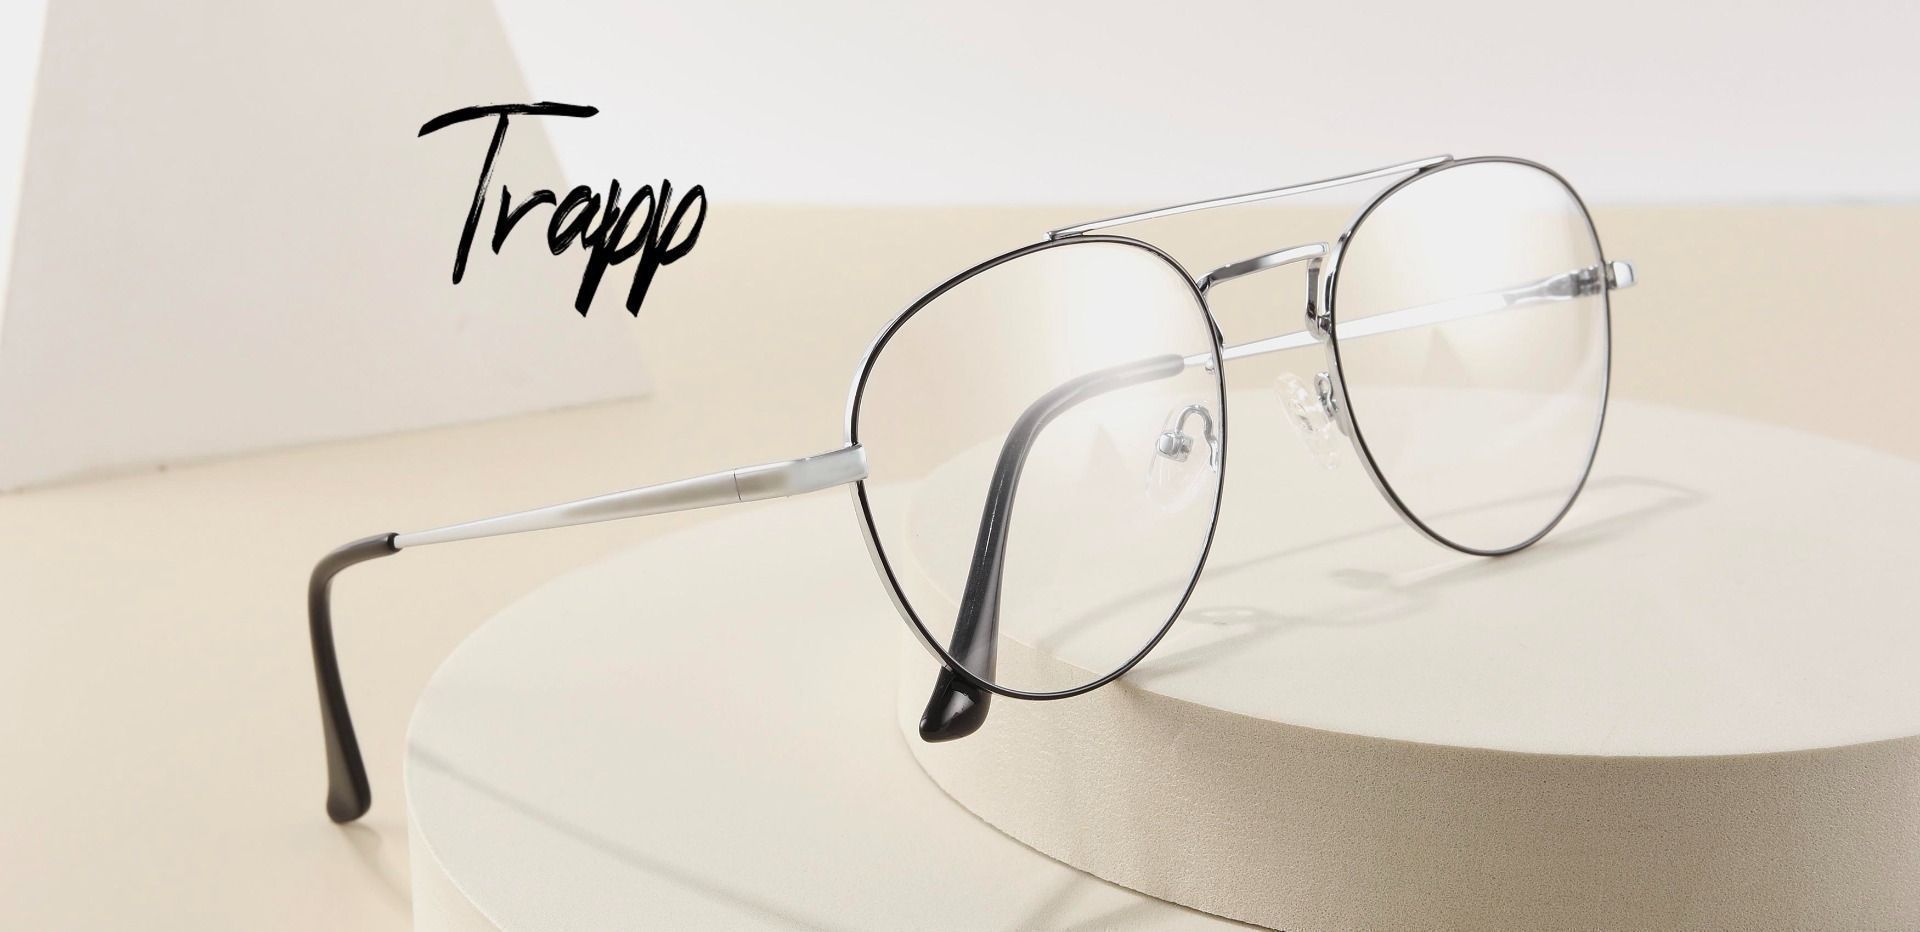 Trapp Aviator Blue Light Blocking Glasses - Gray